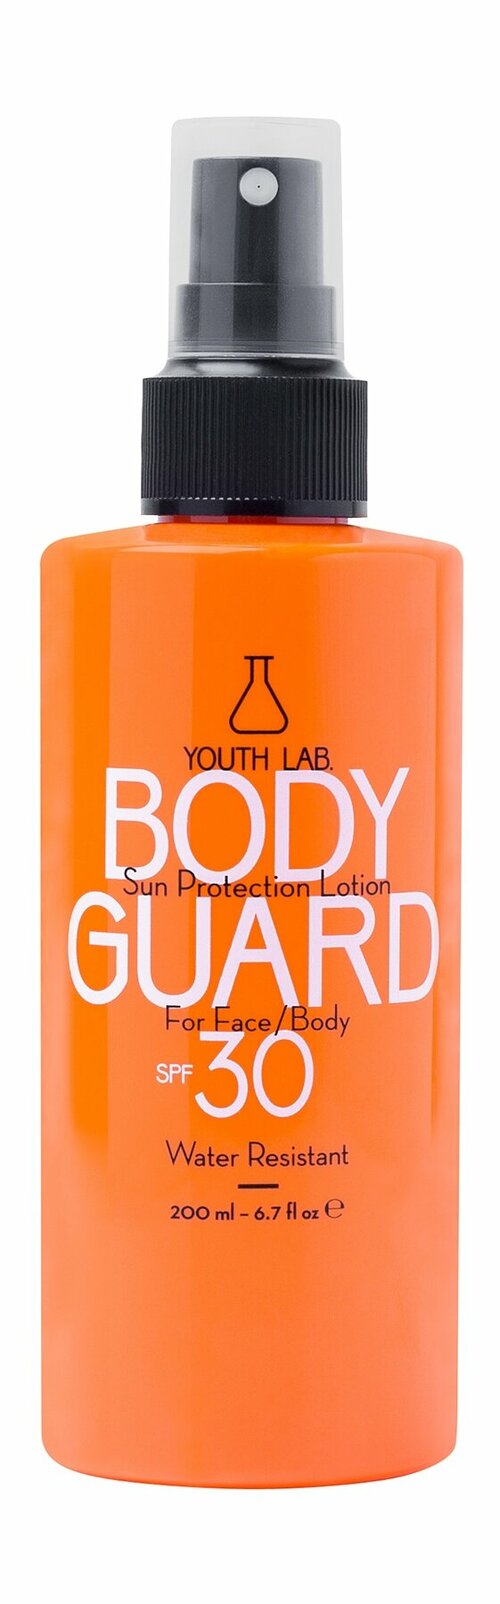 YOUTH LAB Body Guard SPF 30 Лосьон-спрей солнцезащитный для лица и тела SPF 30, 200 мл